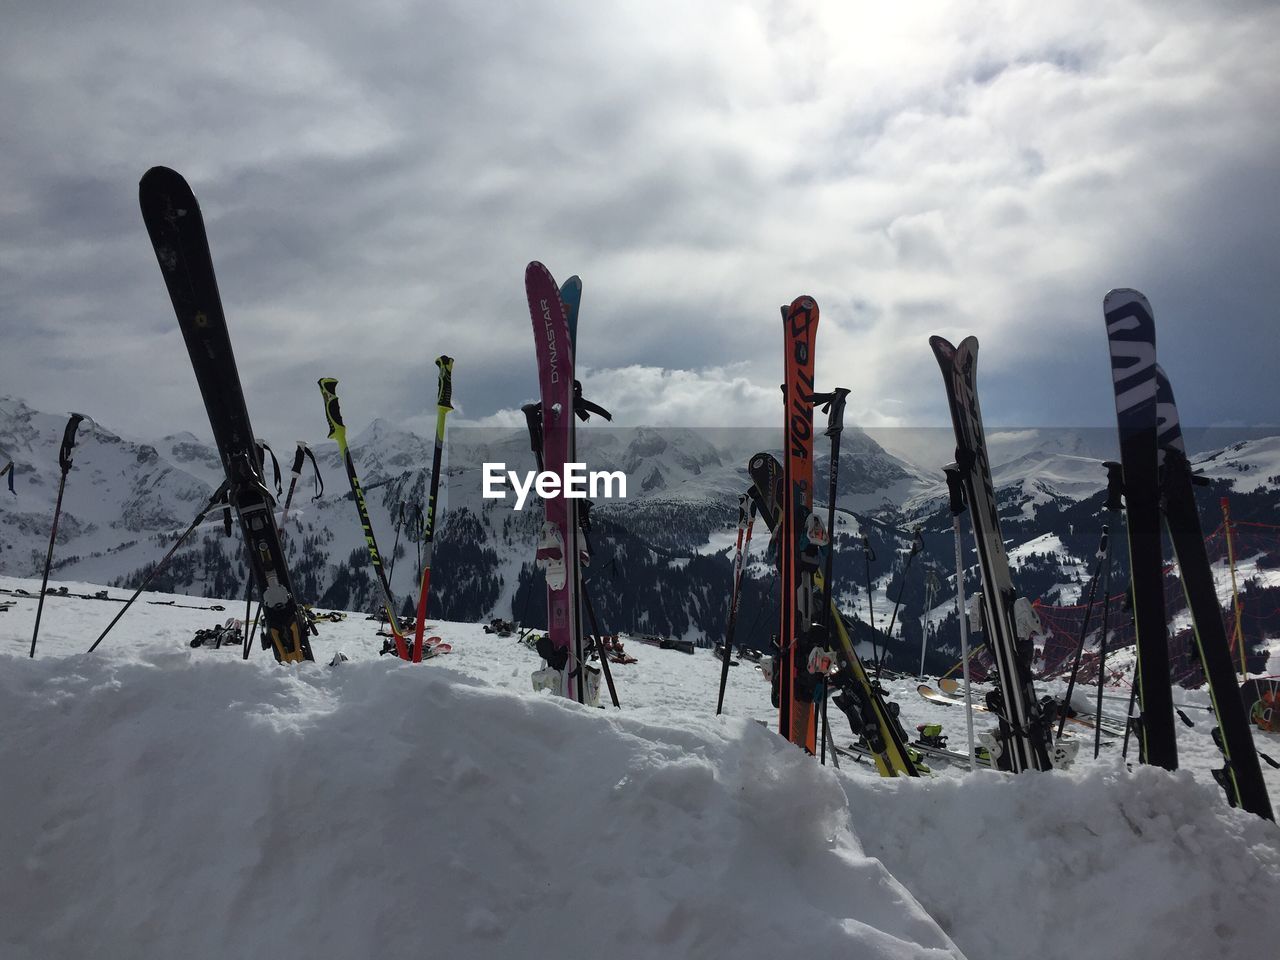 Ski poles on snowcapped mountain against cloudy sky